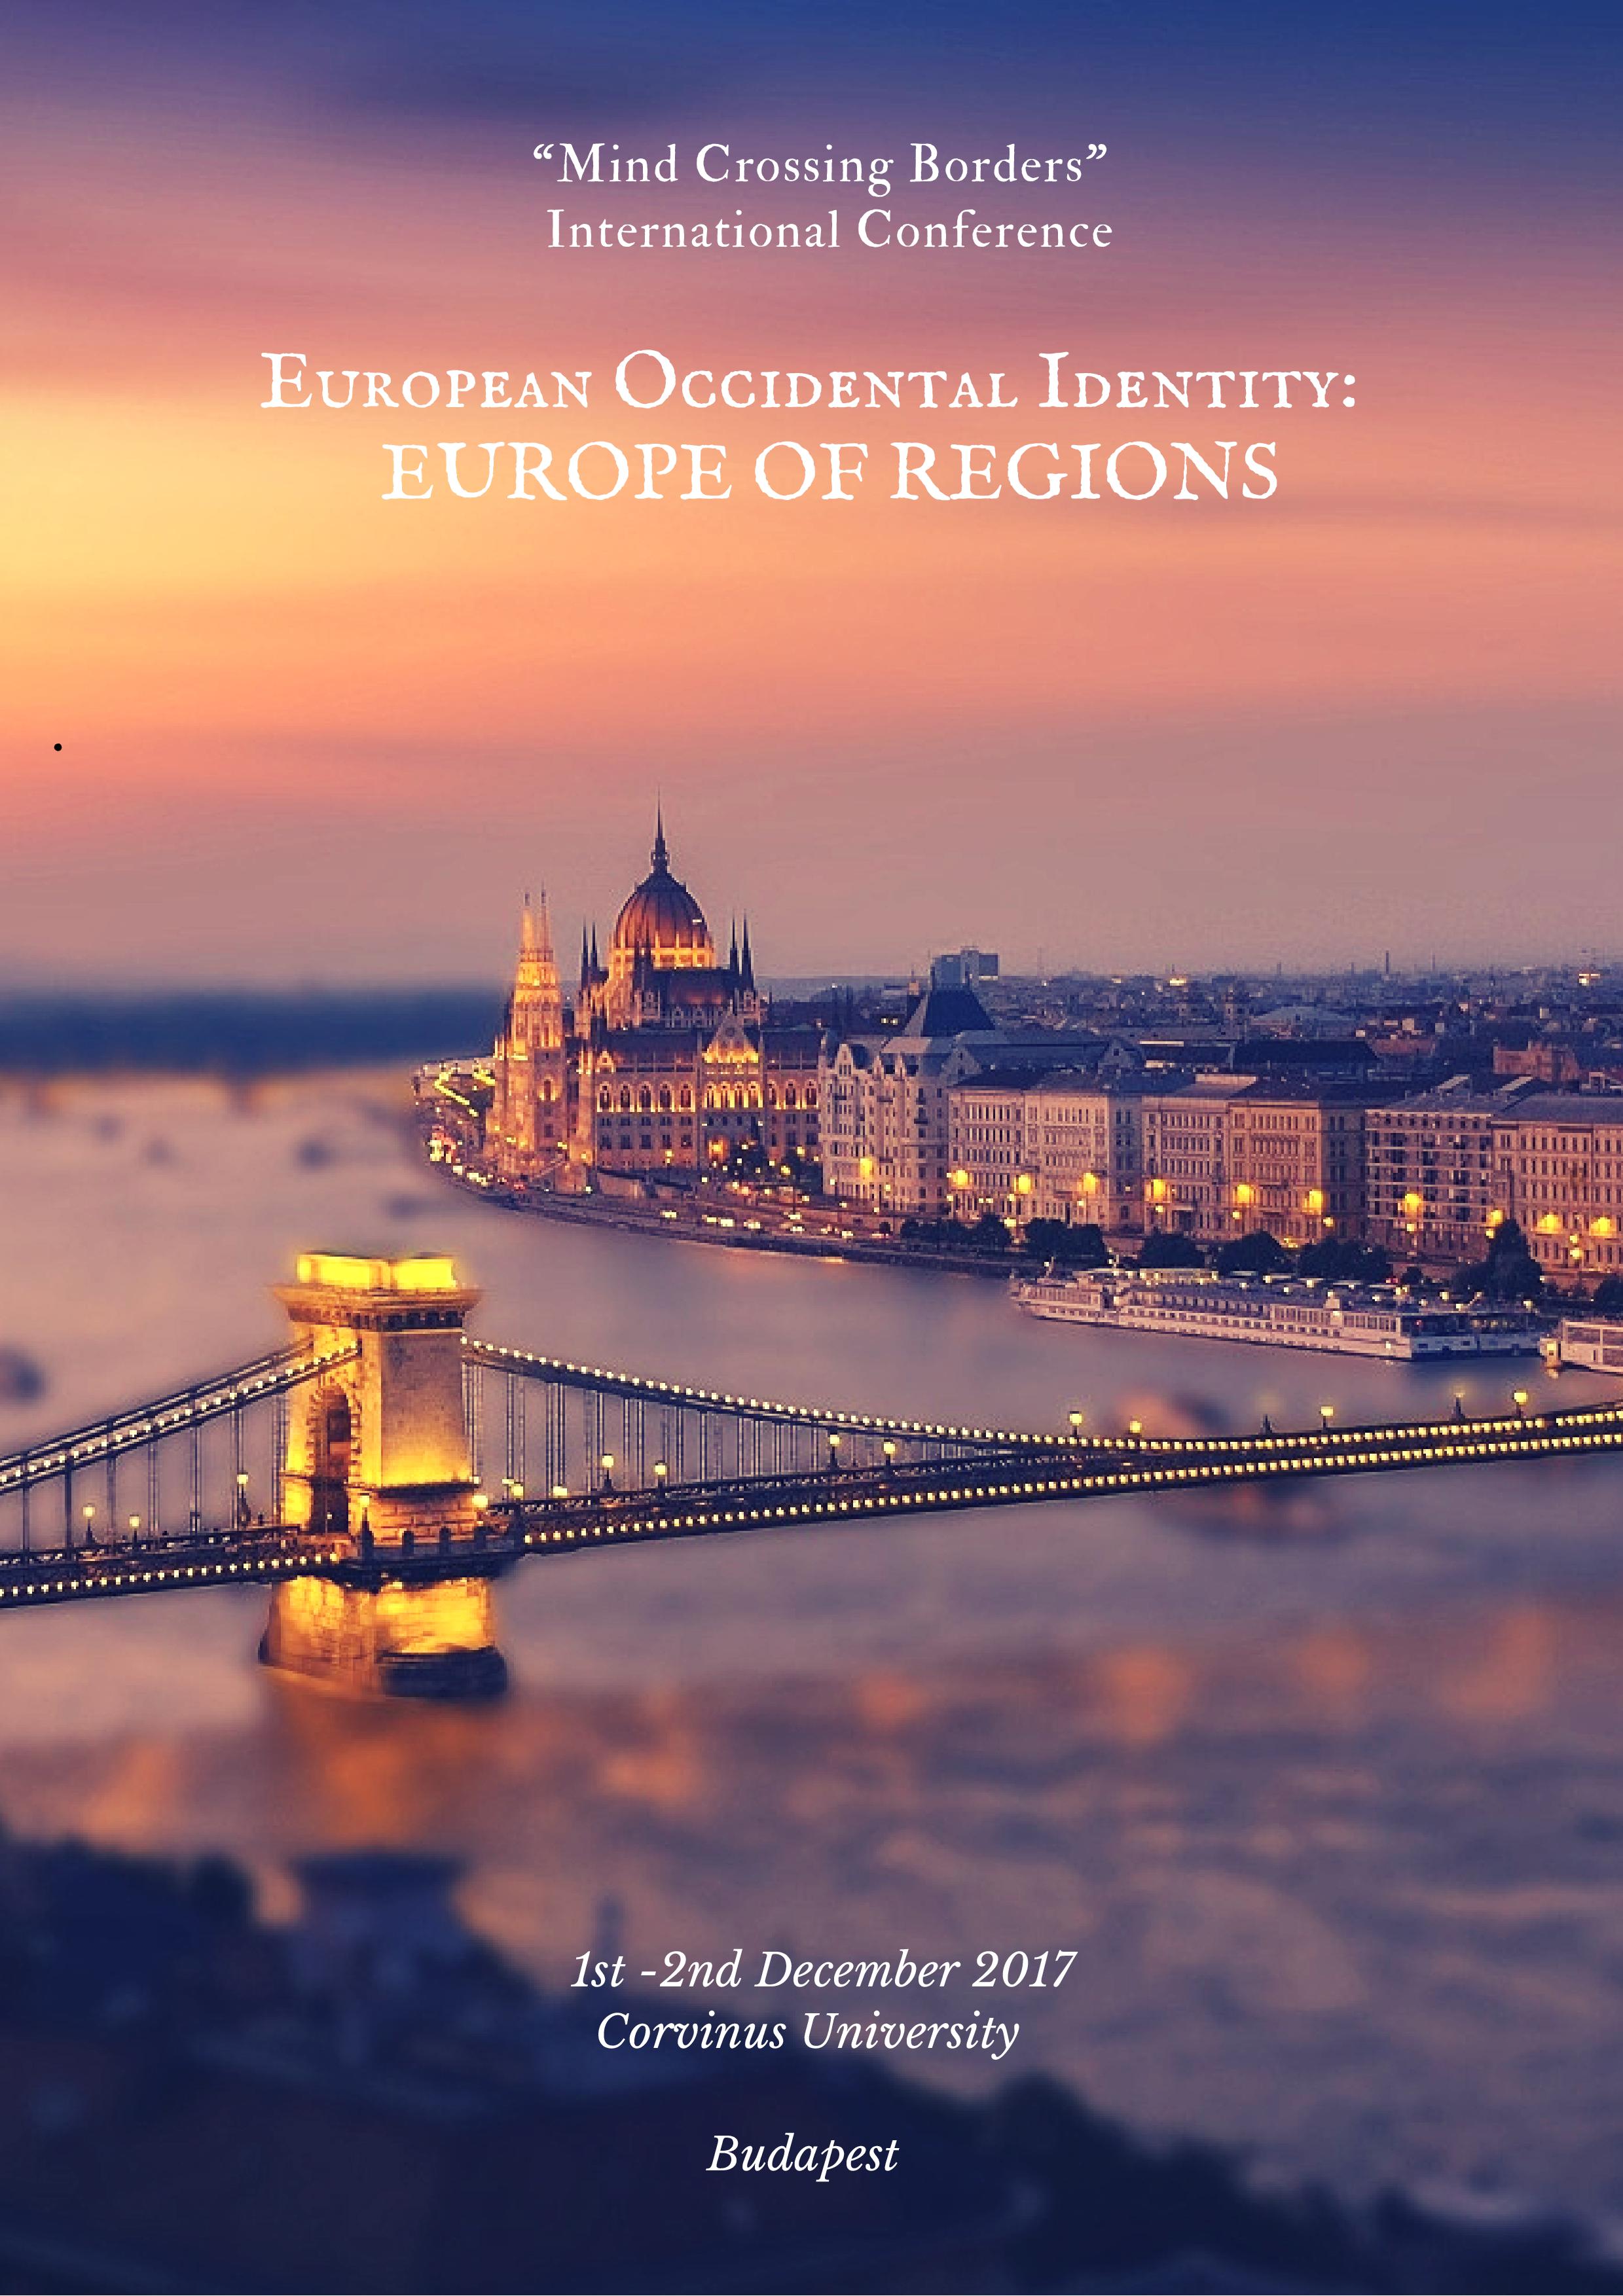 International Conference ” EUROPEAN OCCIDENTAL IDENTITY: EUROPE OF REGIONS”